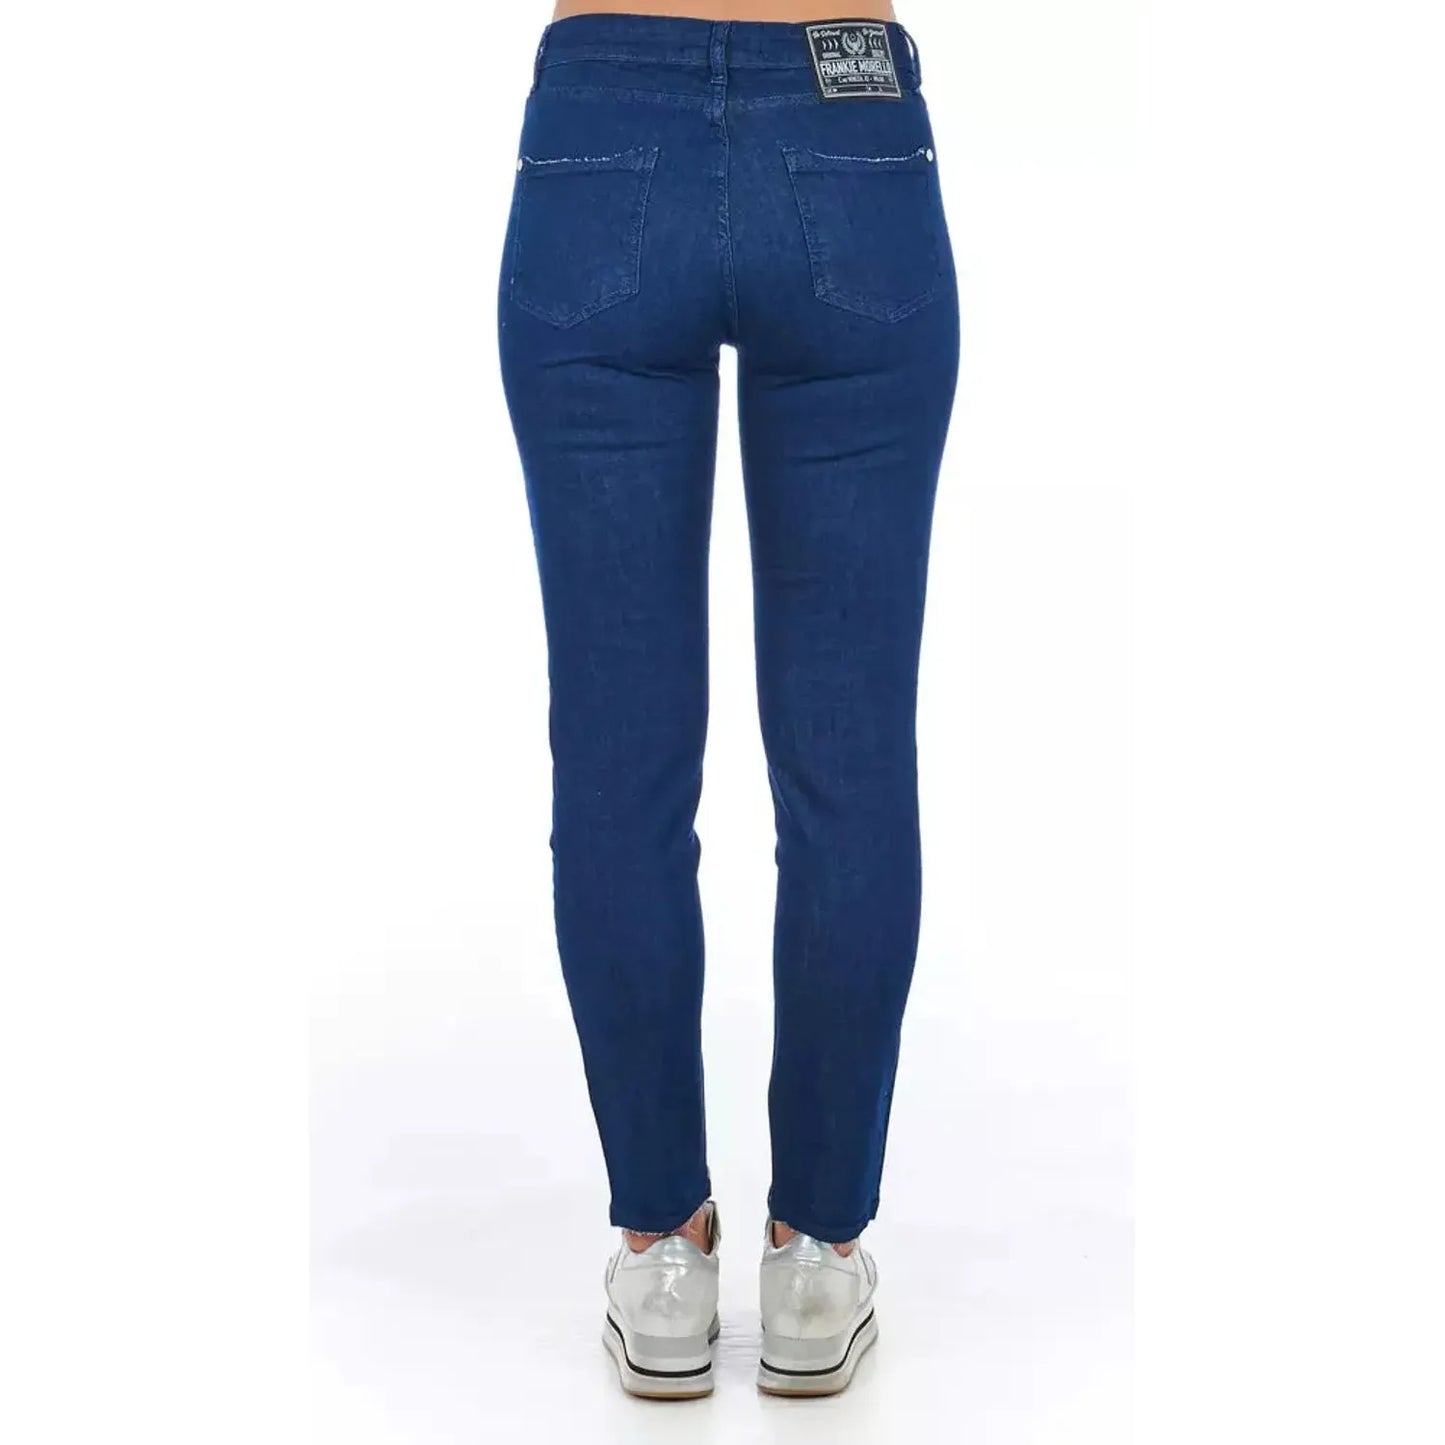 Frankie Morello Chic Multi-Pocket Skinny Denim blue-cotton-jeans-pant-50 stock_product_image_21769_691237086-23-4a520b12-c34.webp